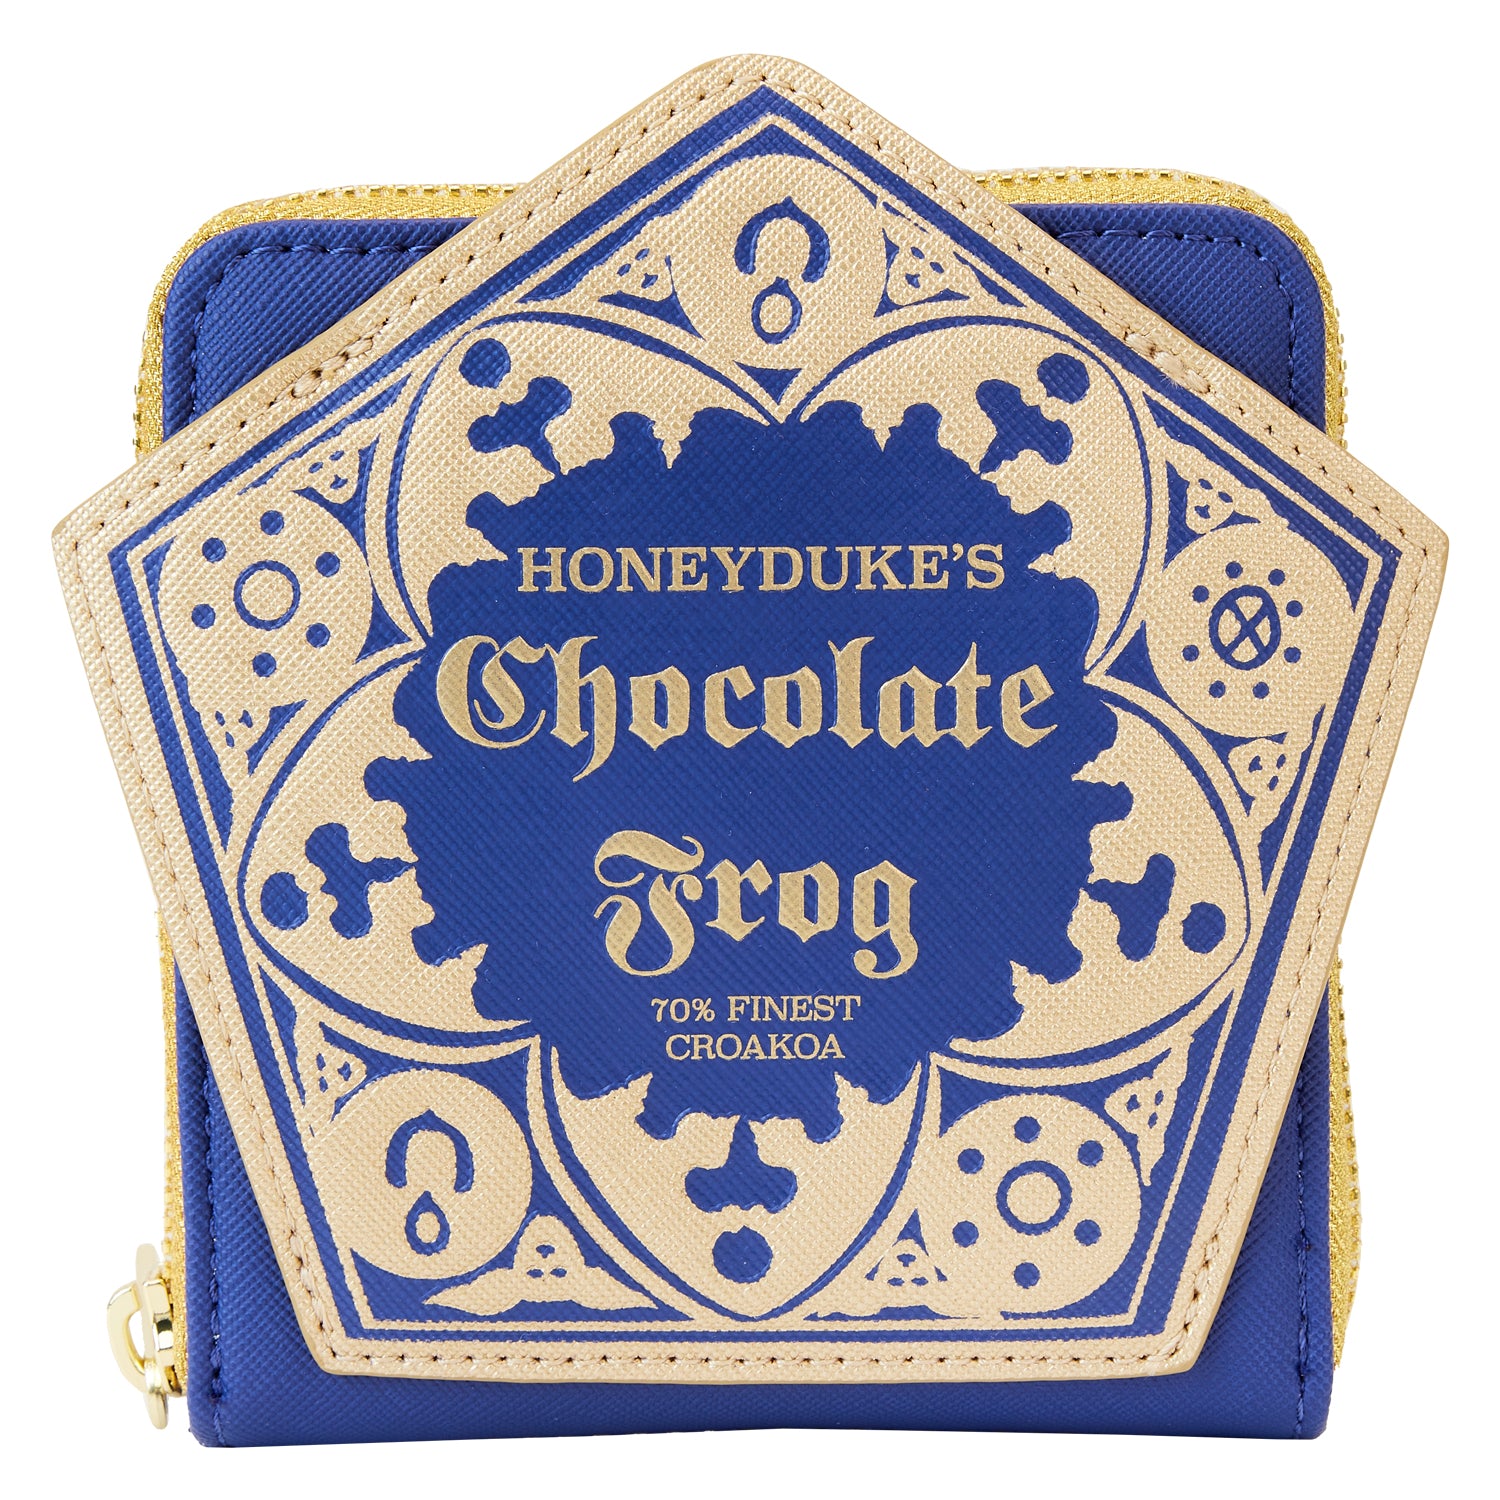 Loungefly x Harry Potter Honeyduke's Chocolate Frog Wallet